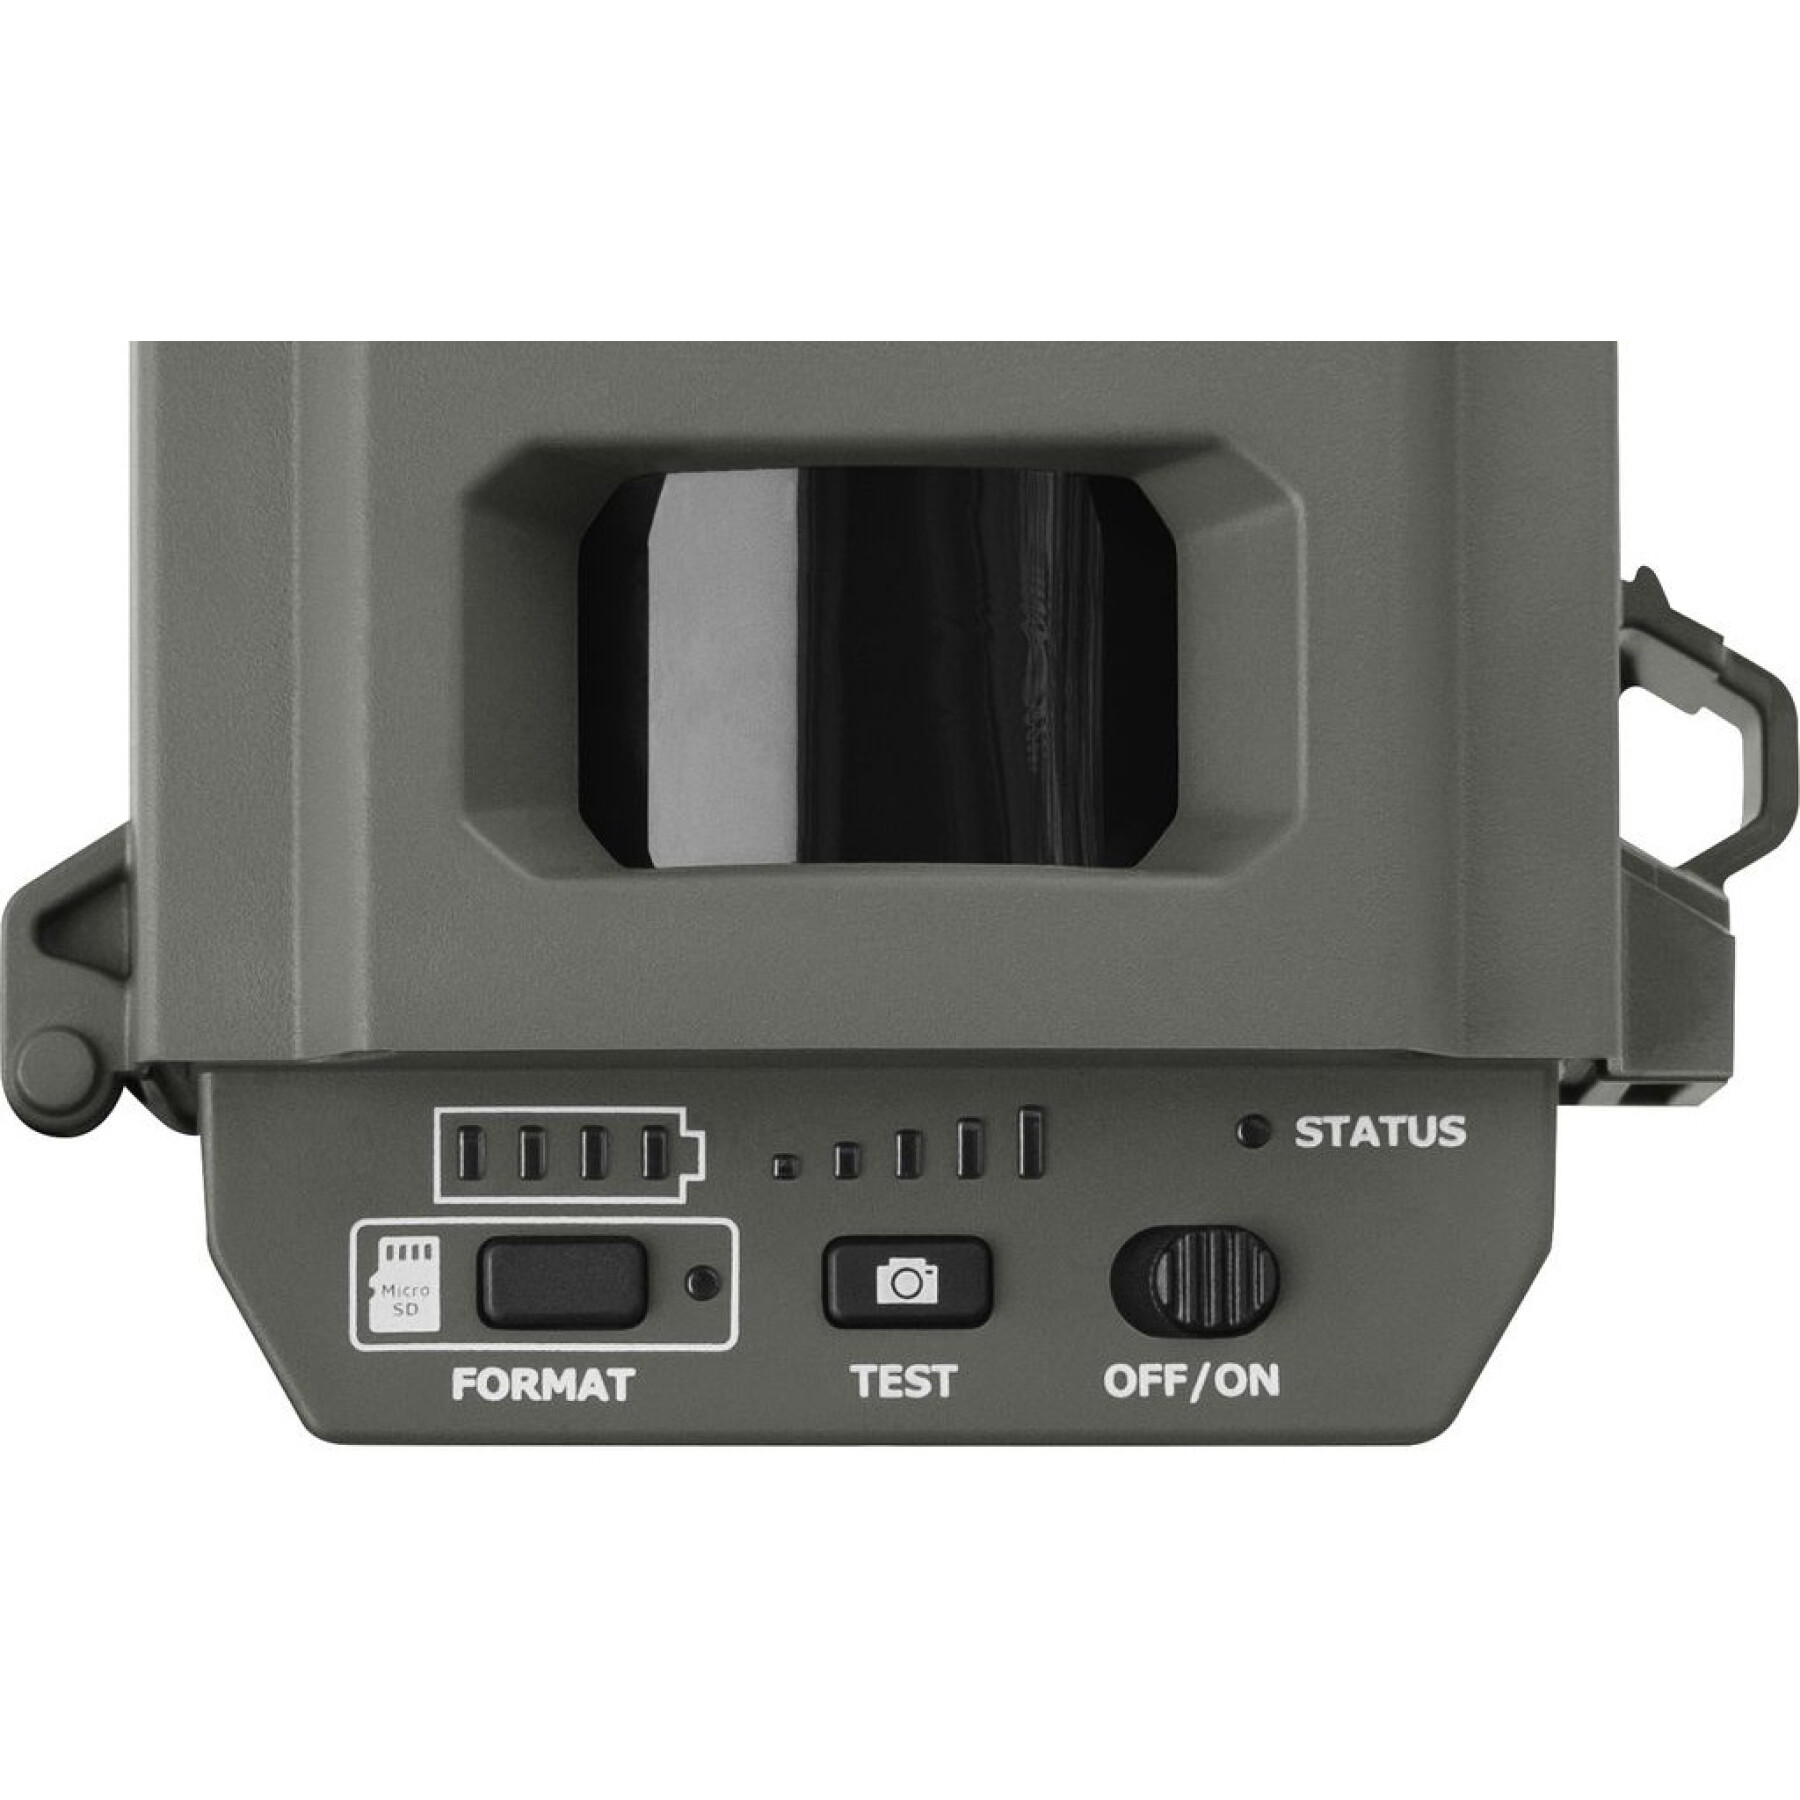 Jagdkamera mit Videoübertragung Spypoint Flex-E36